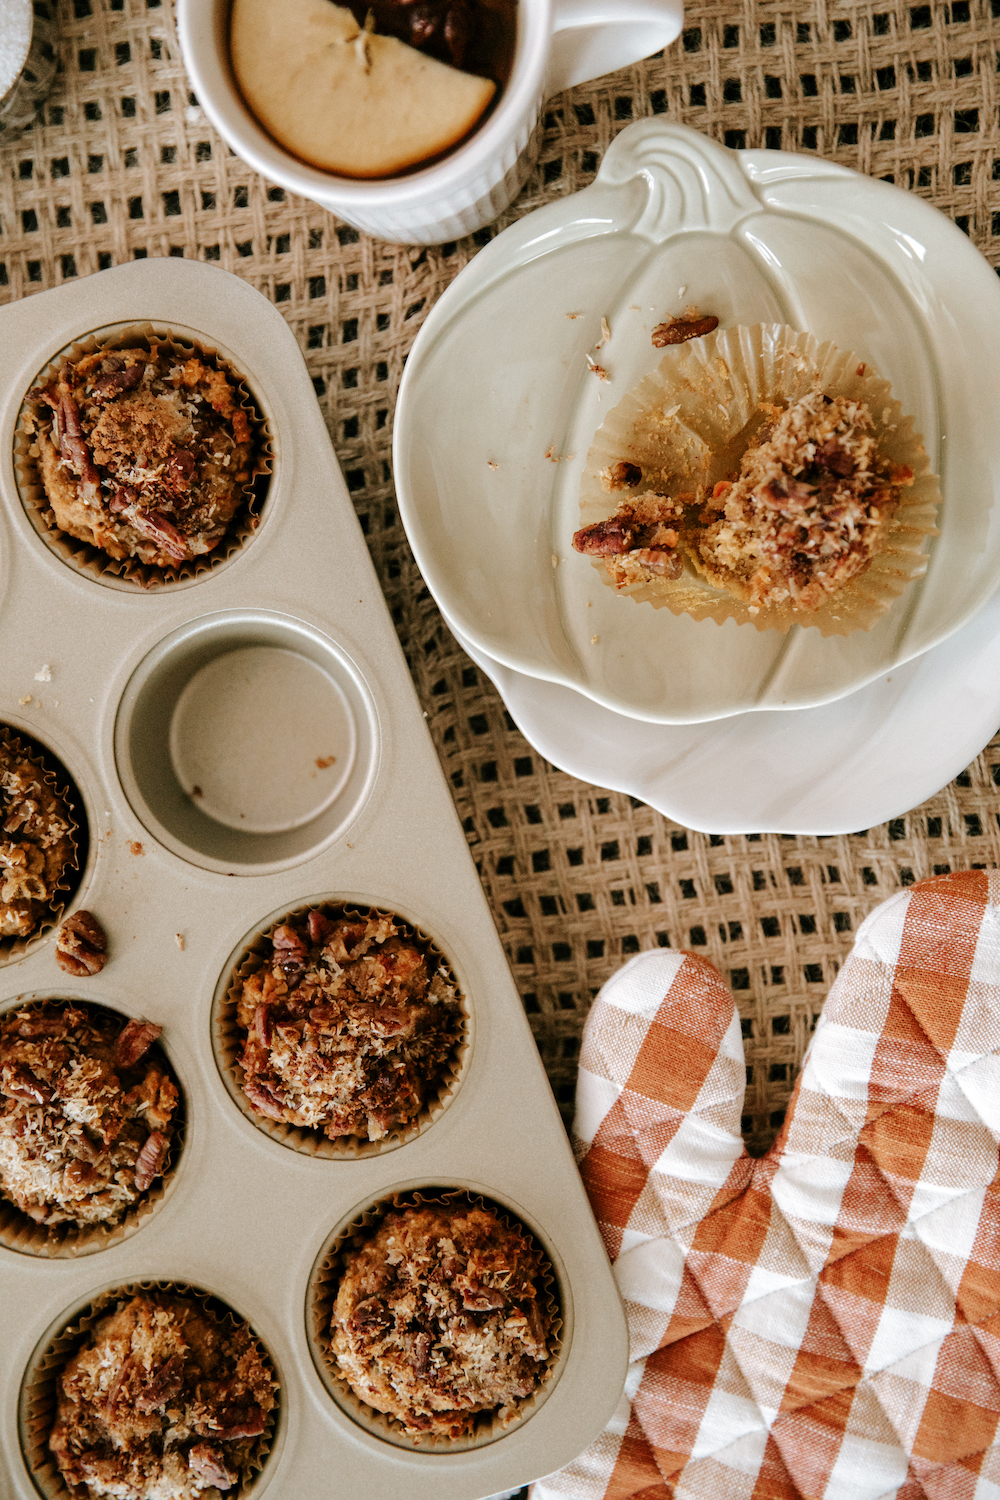 make muffins to celebrate fall!